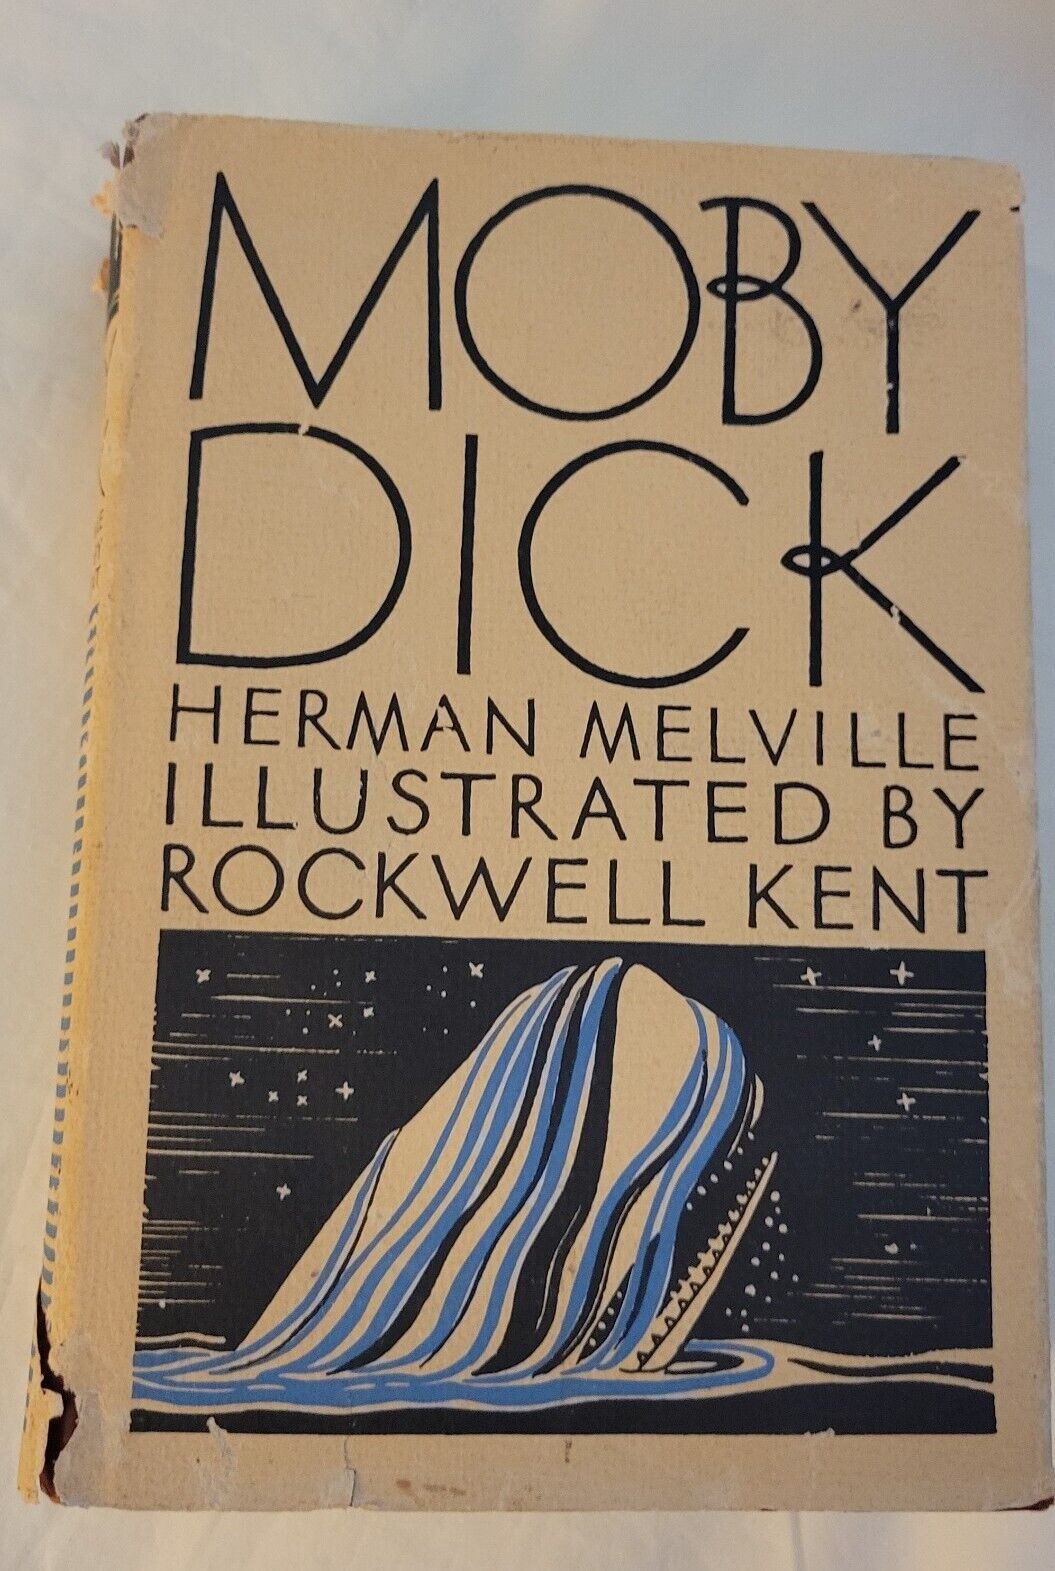 Moby Dick Herman Melville Rockwell Kent 1982 Modern Library Book HCDJ